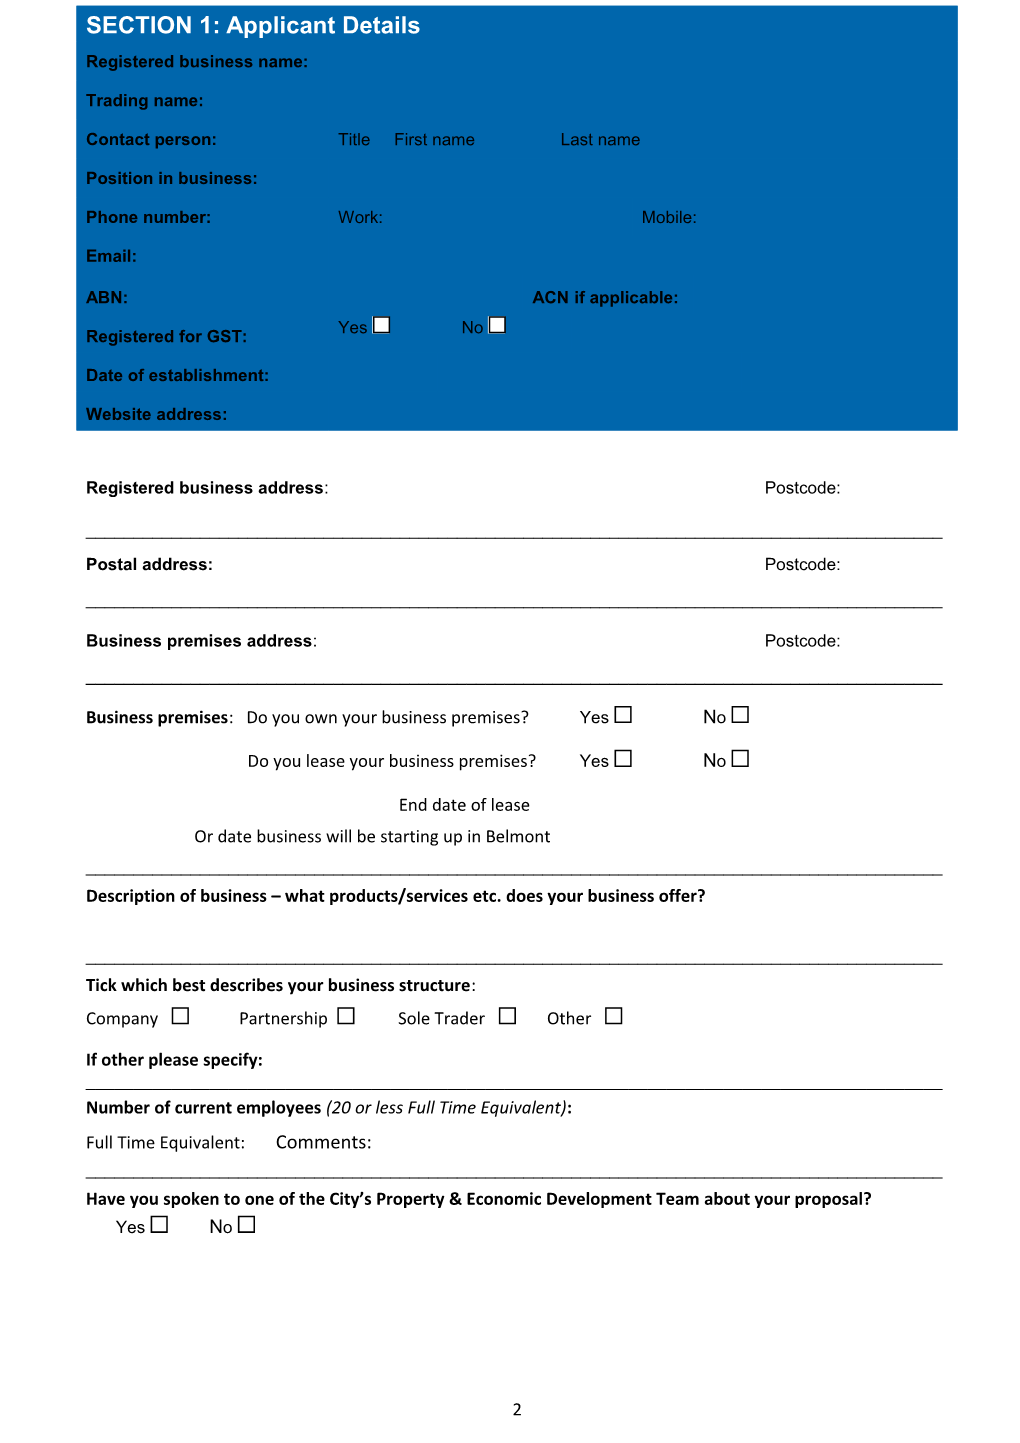 Belmont Business Innovation Grant Application Form